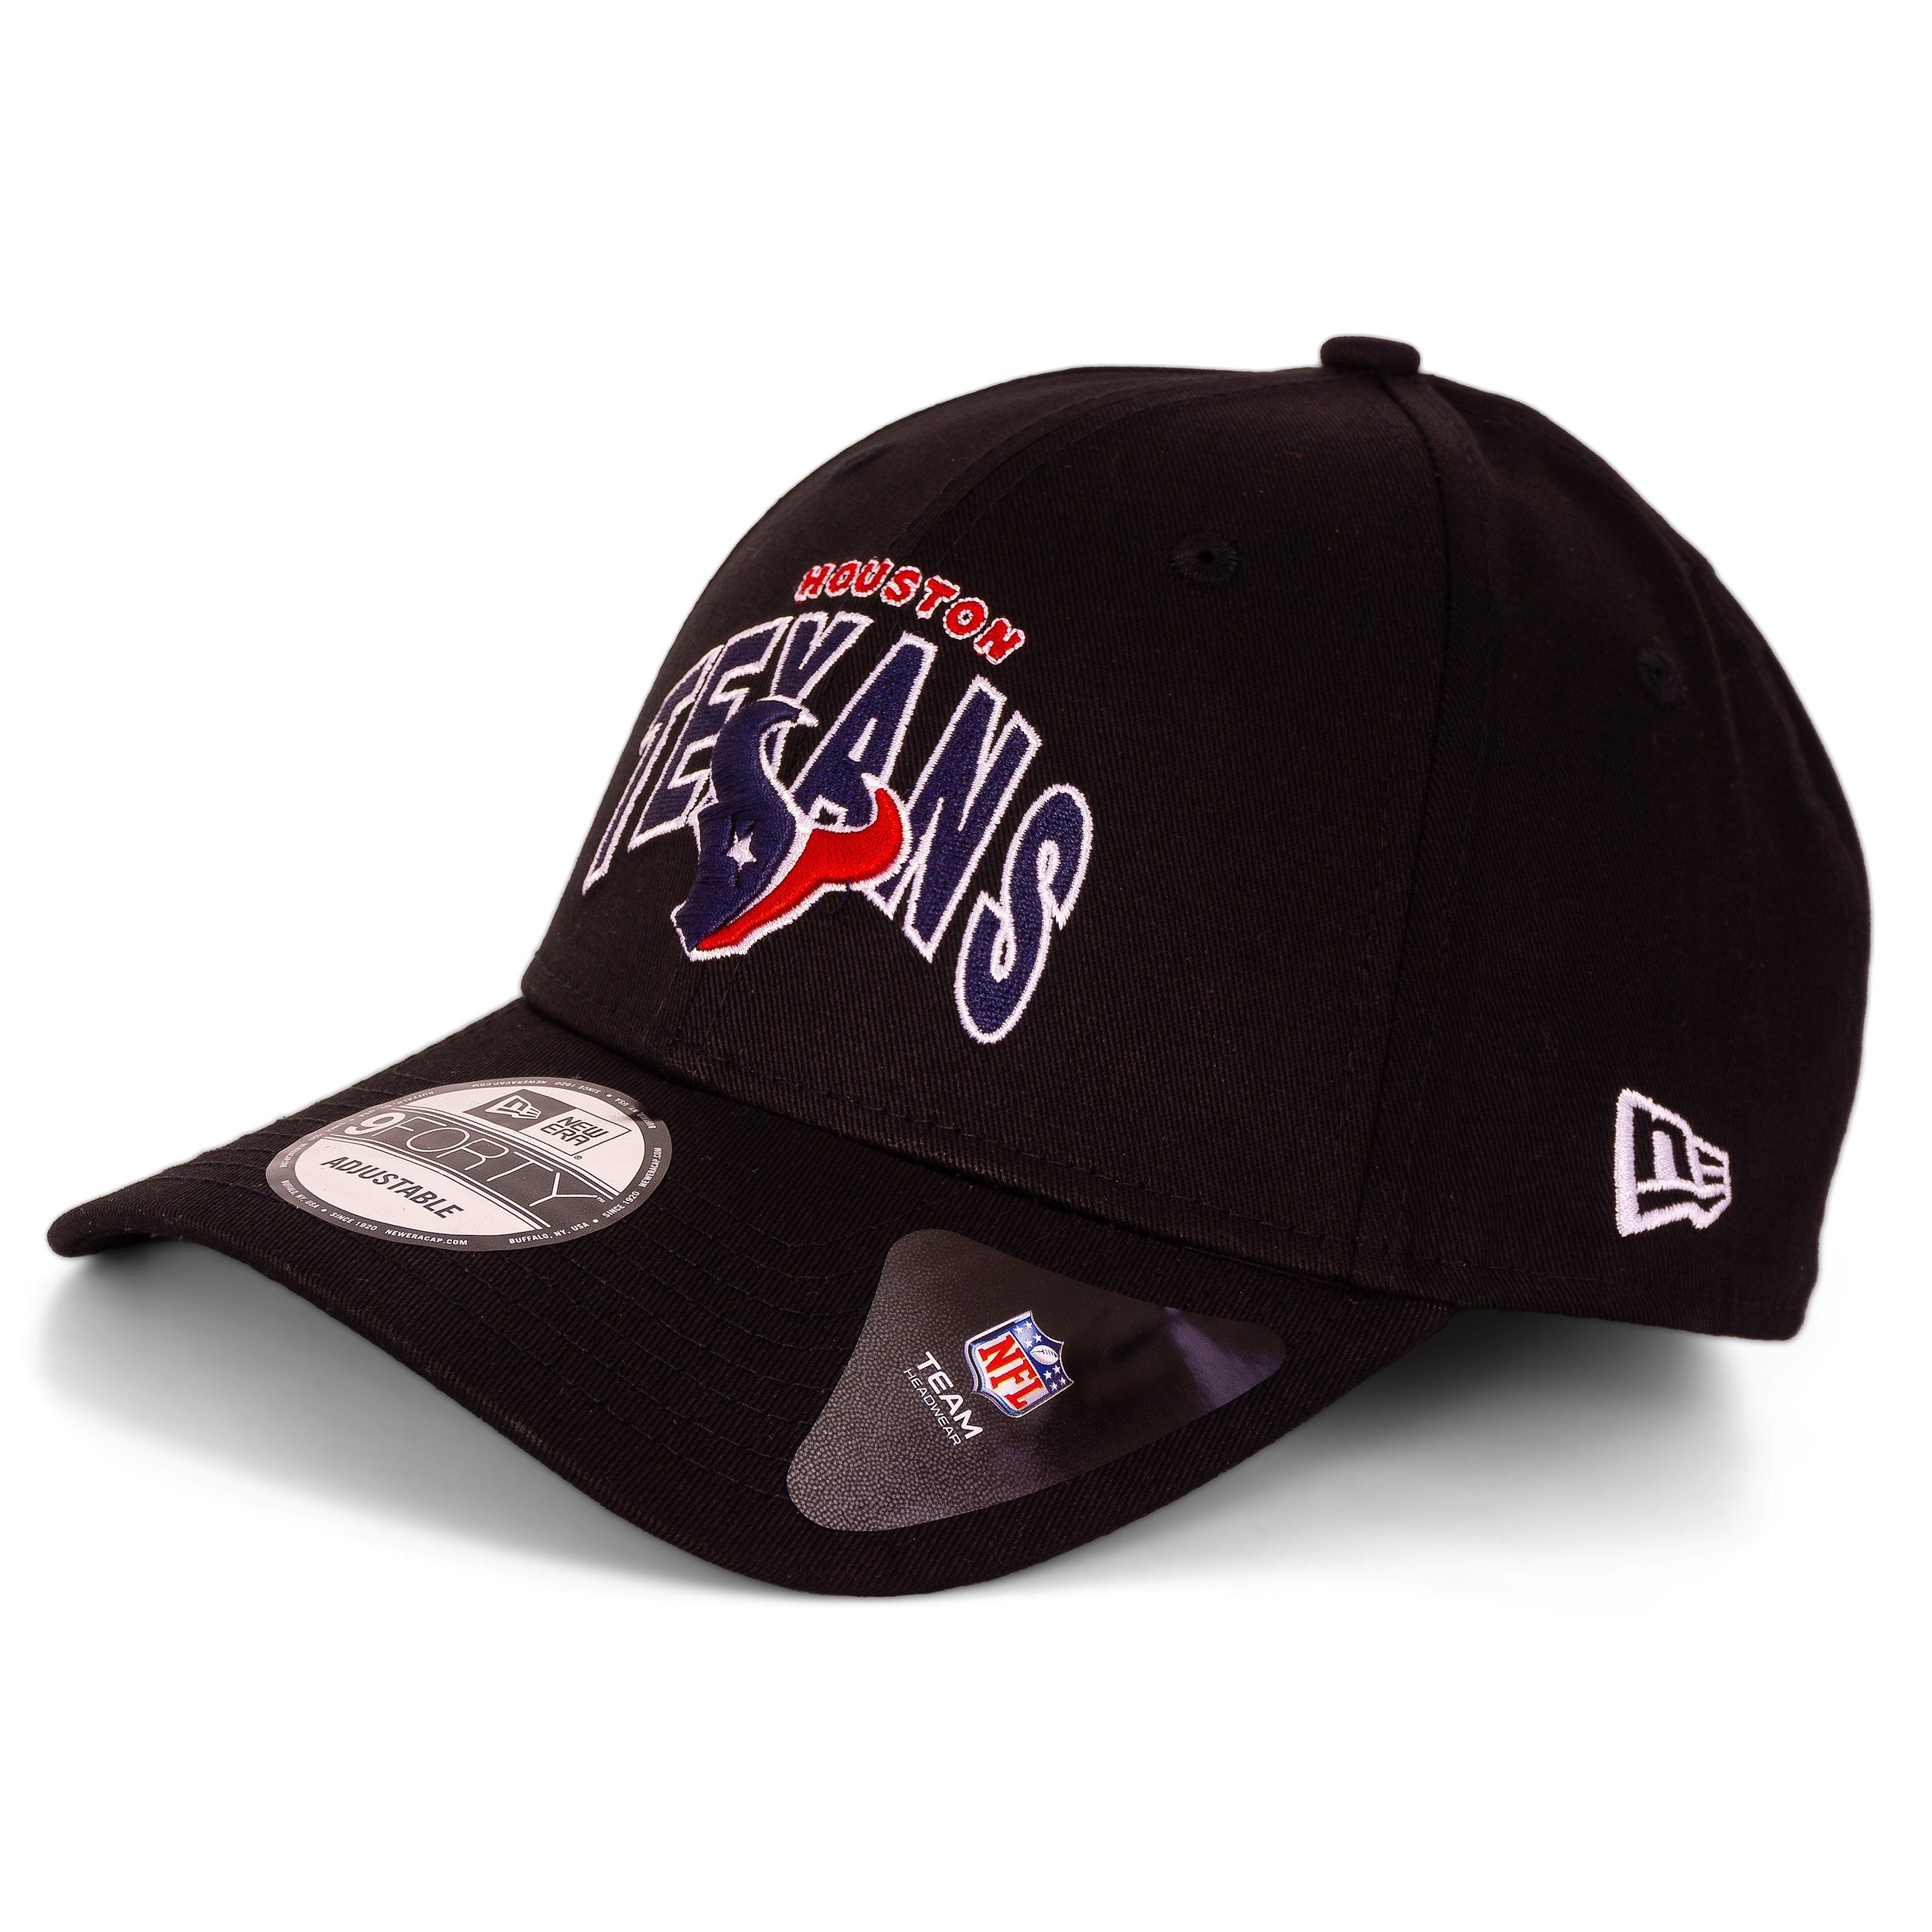 New New HouTex Era (1-St) League Era Texans Cap Baseball 940 Cap Houston